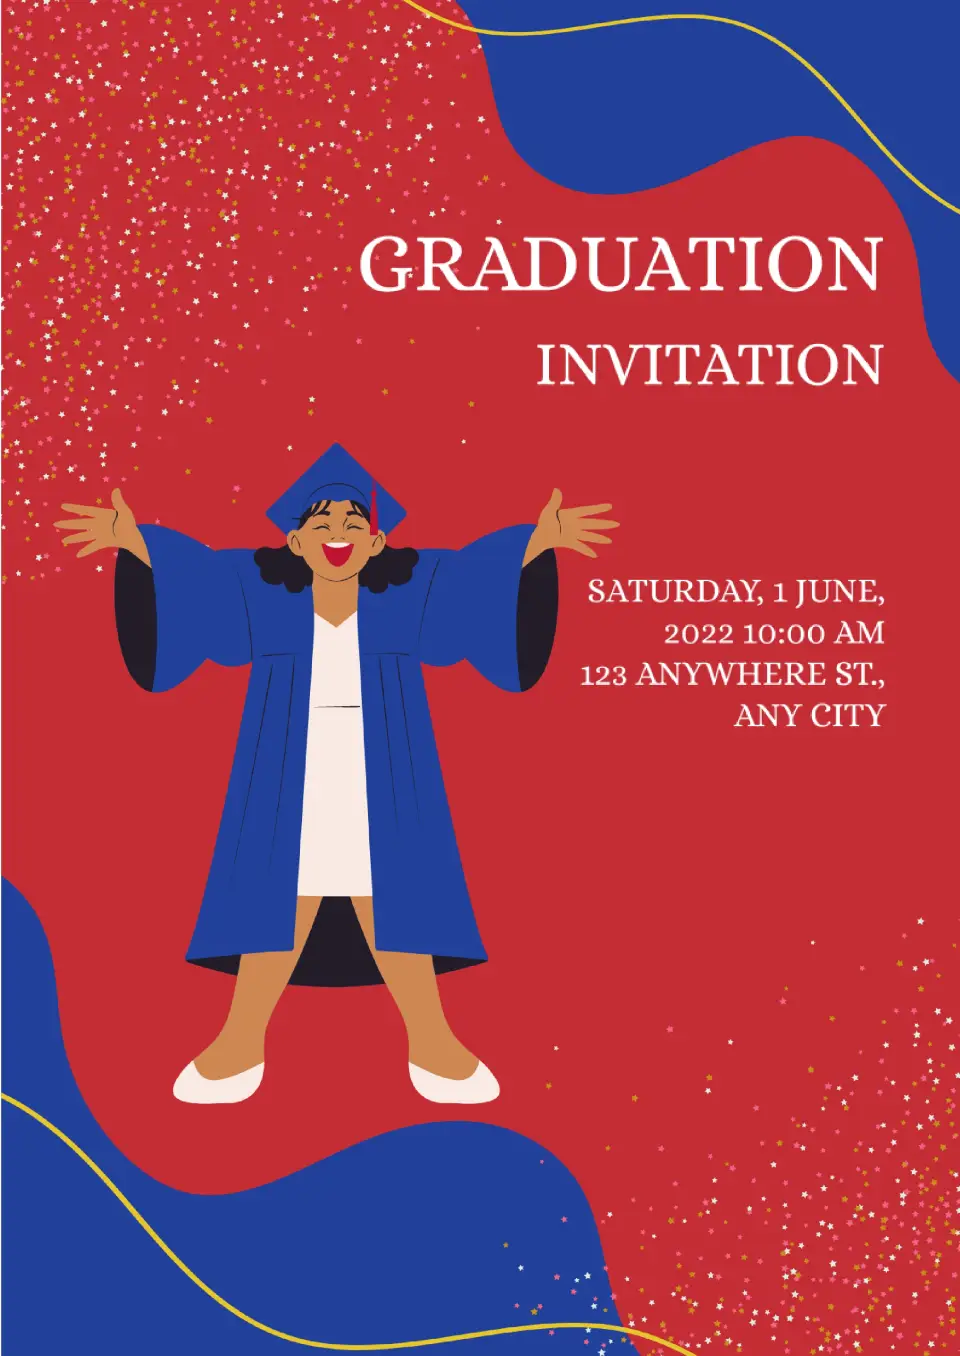 Graduation Invitation Template for Google Docs